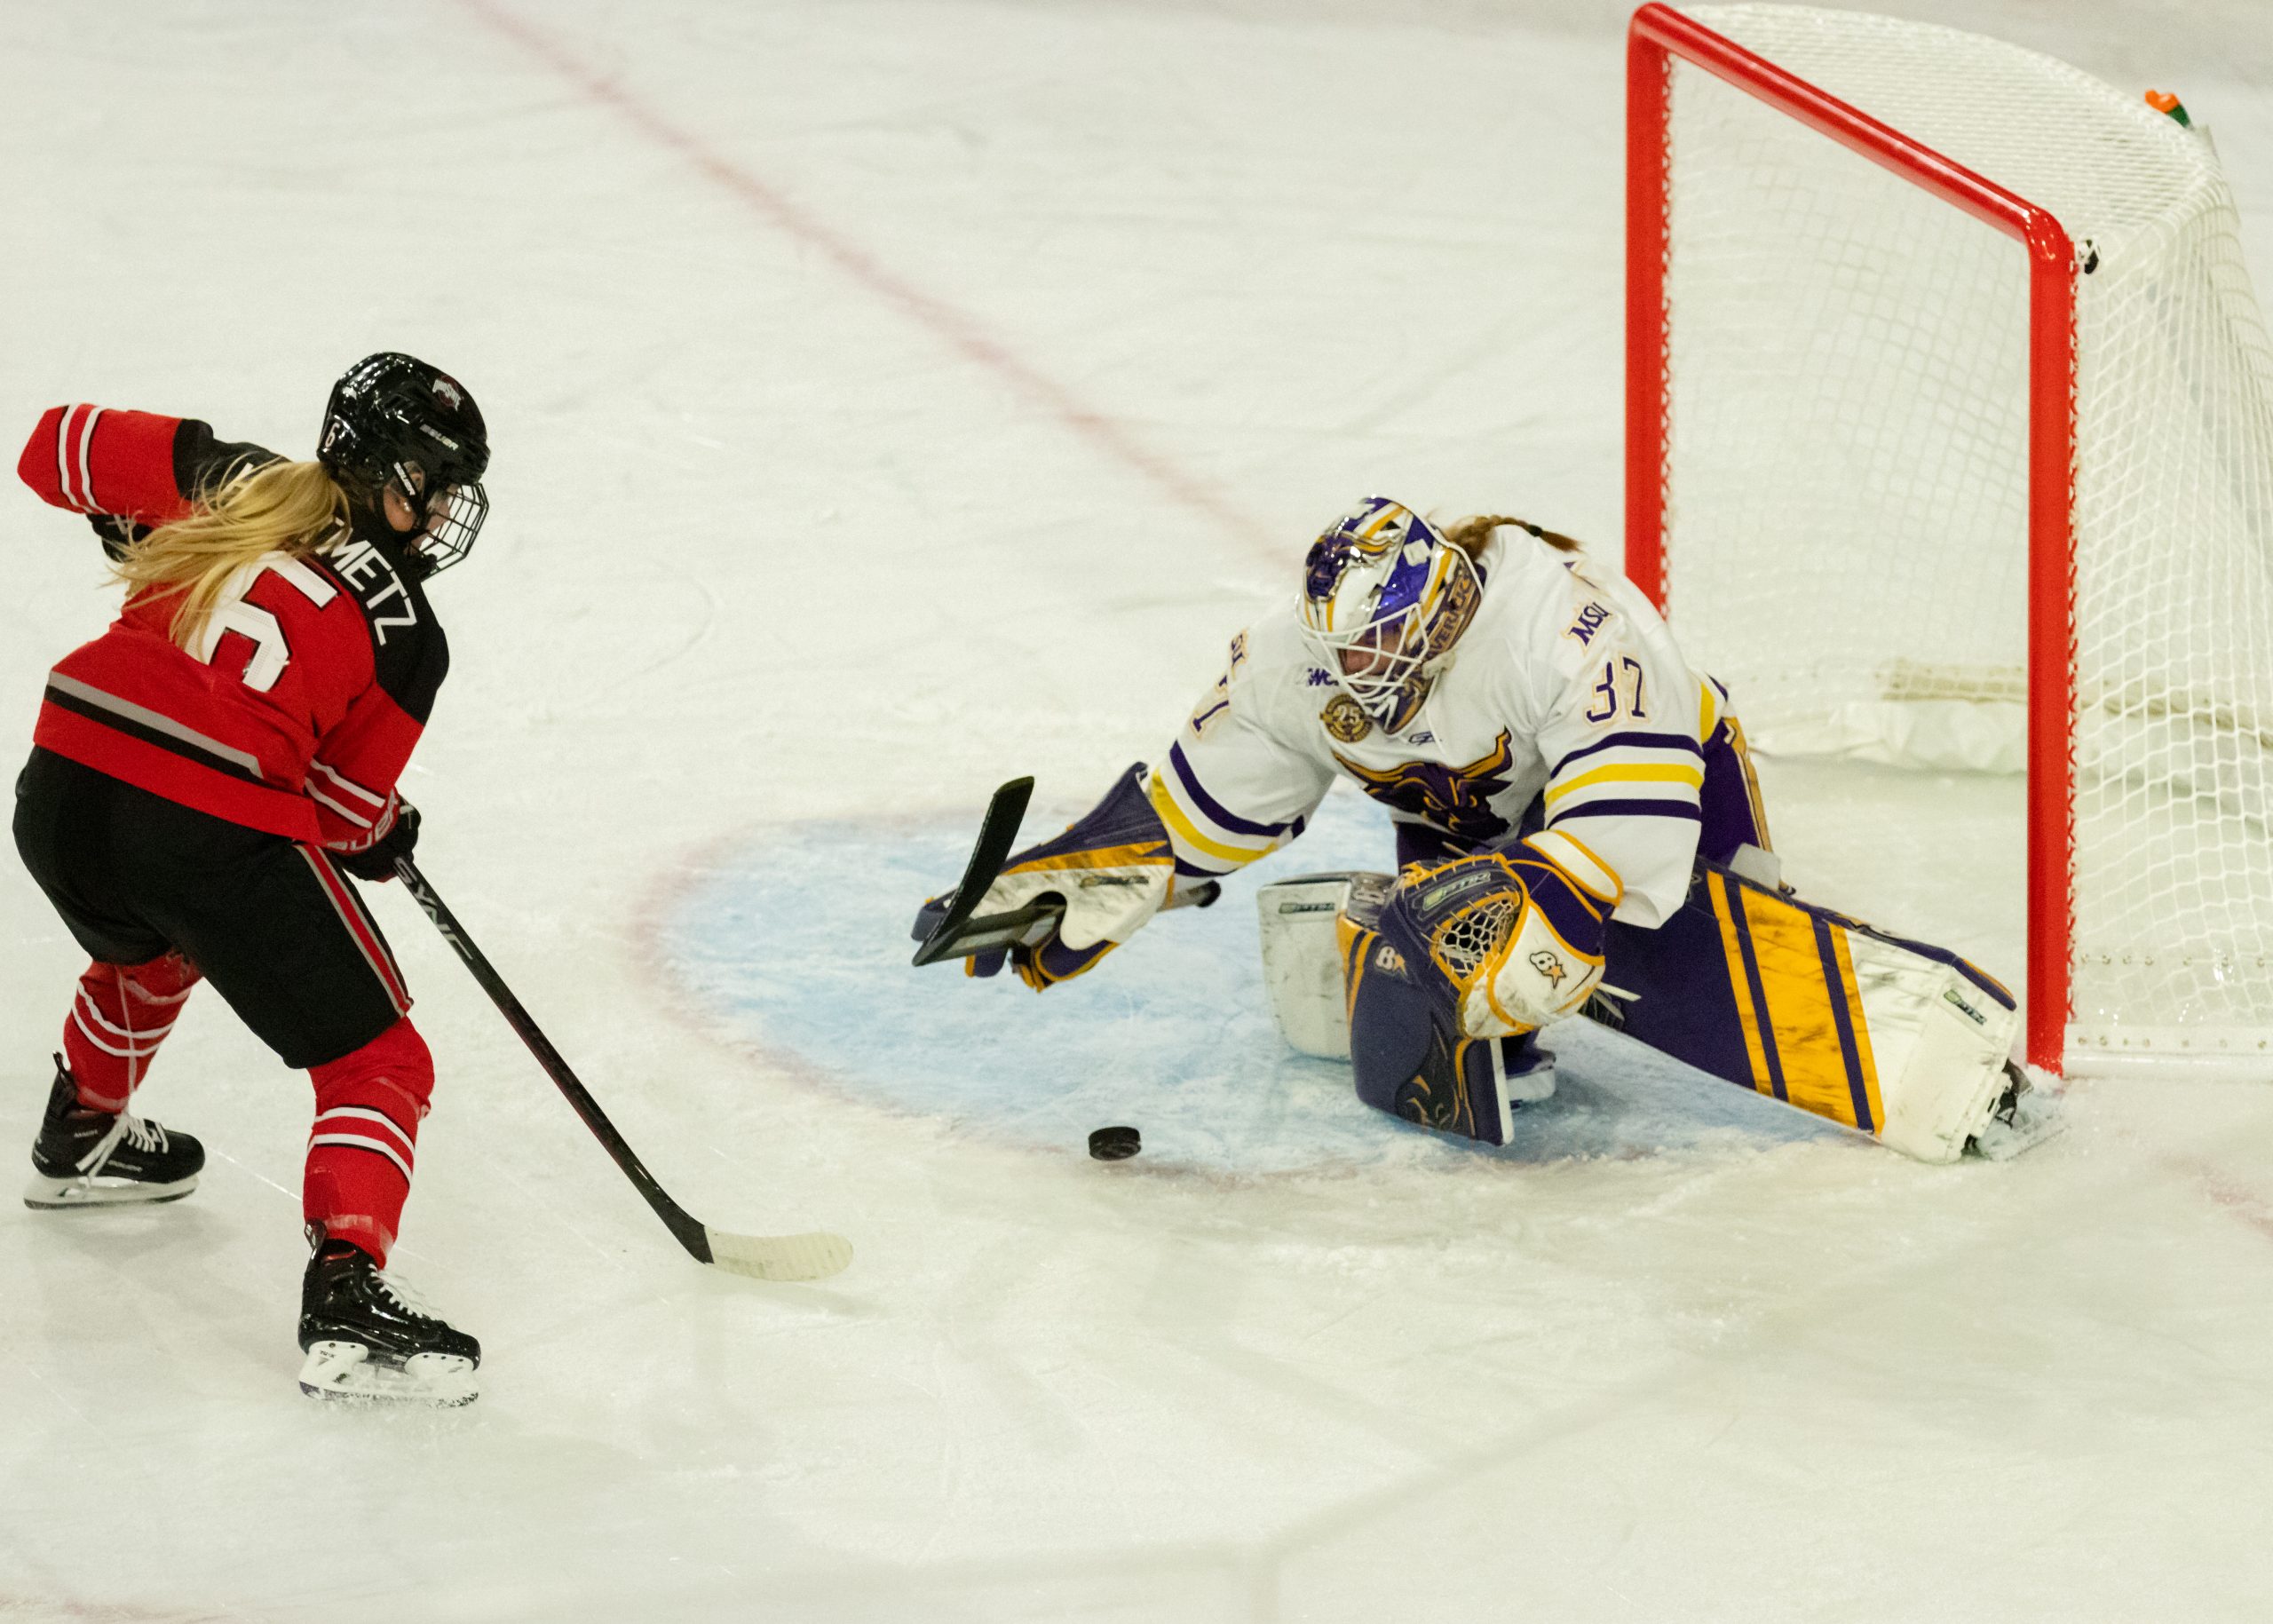 Maverick Hockey Quick Hits: MSU women's hockey team off to best